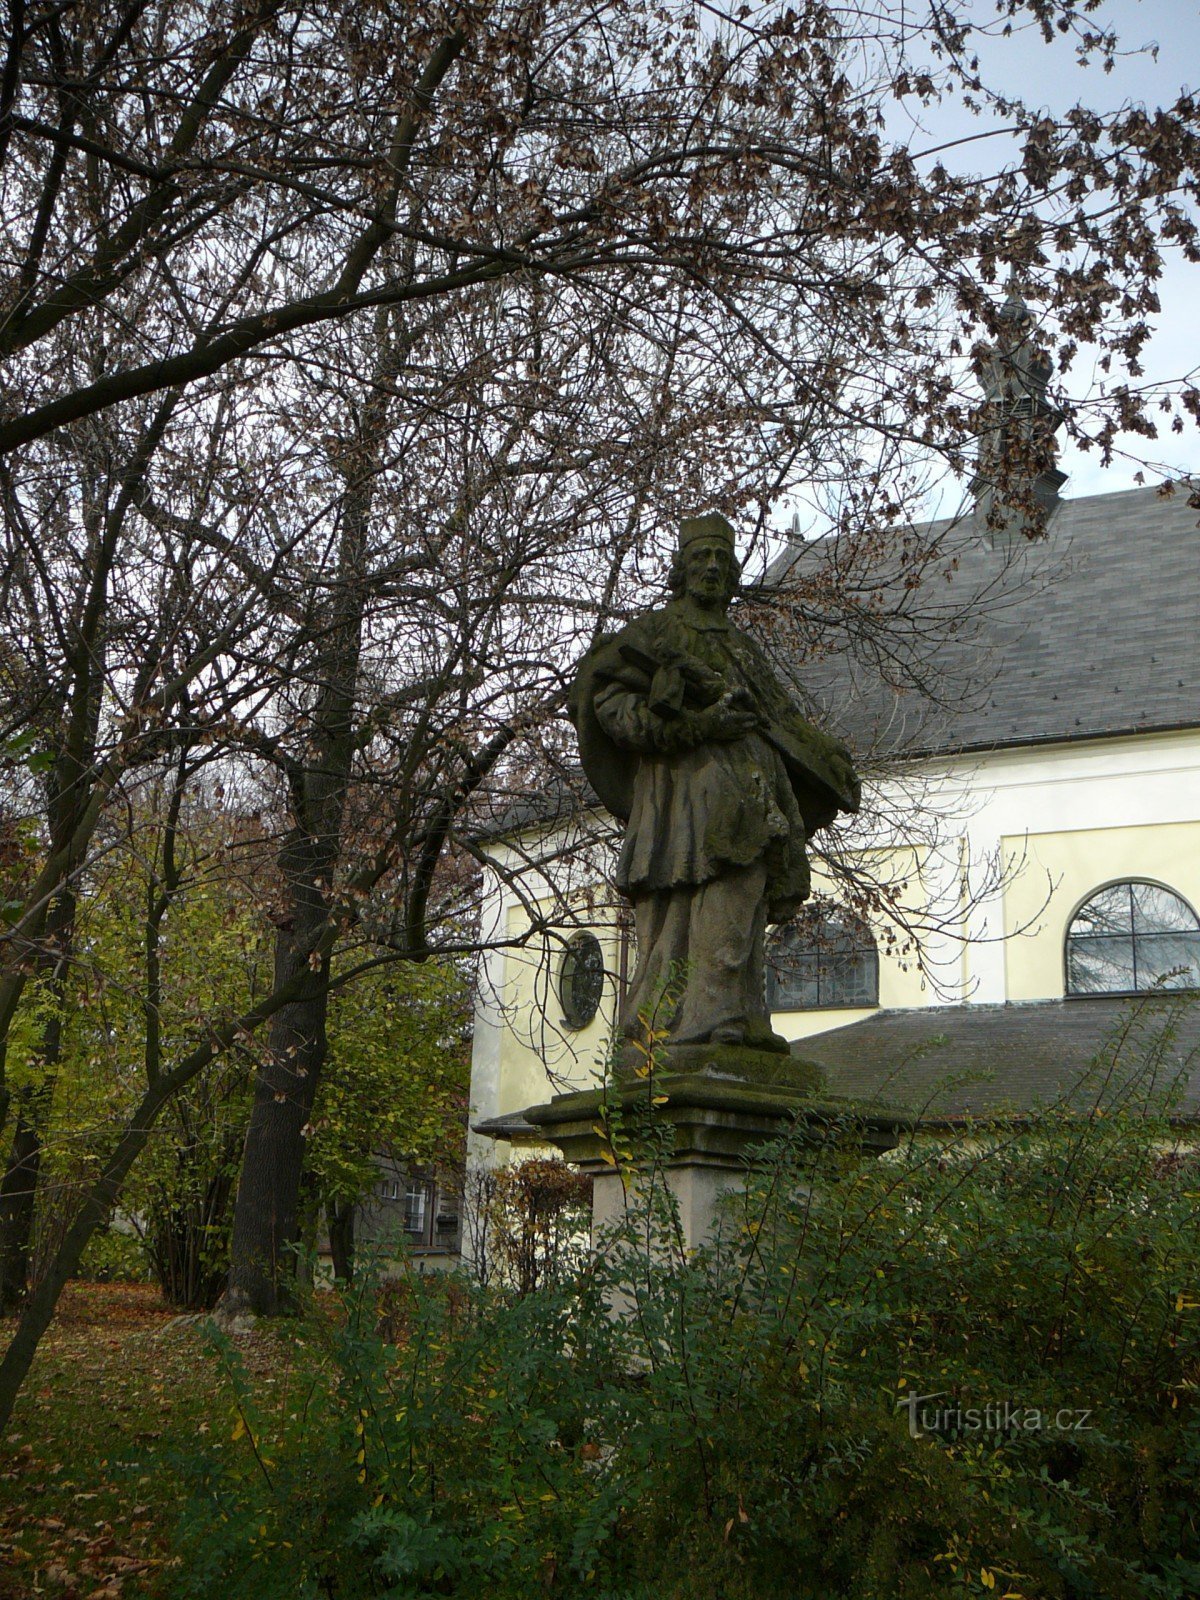 St. Johannes van Nepomuck in Místek